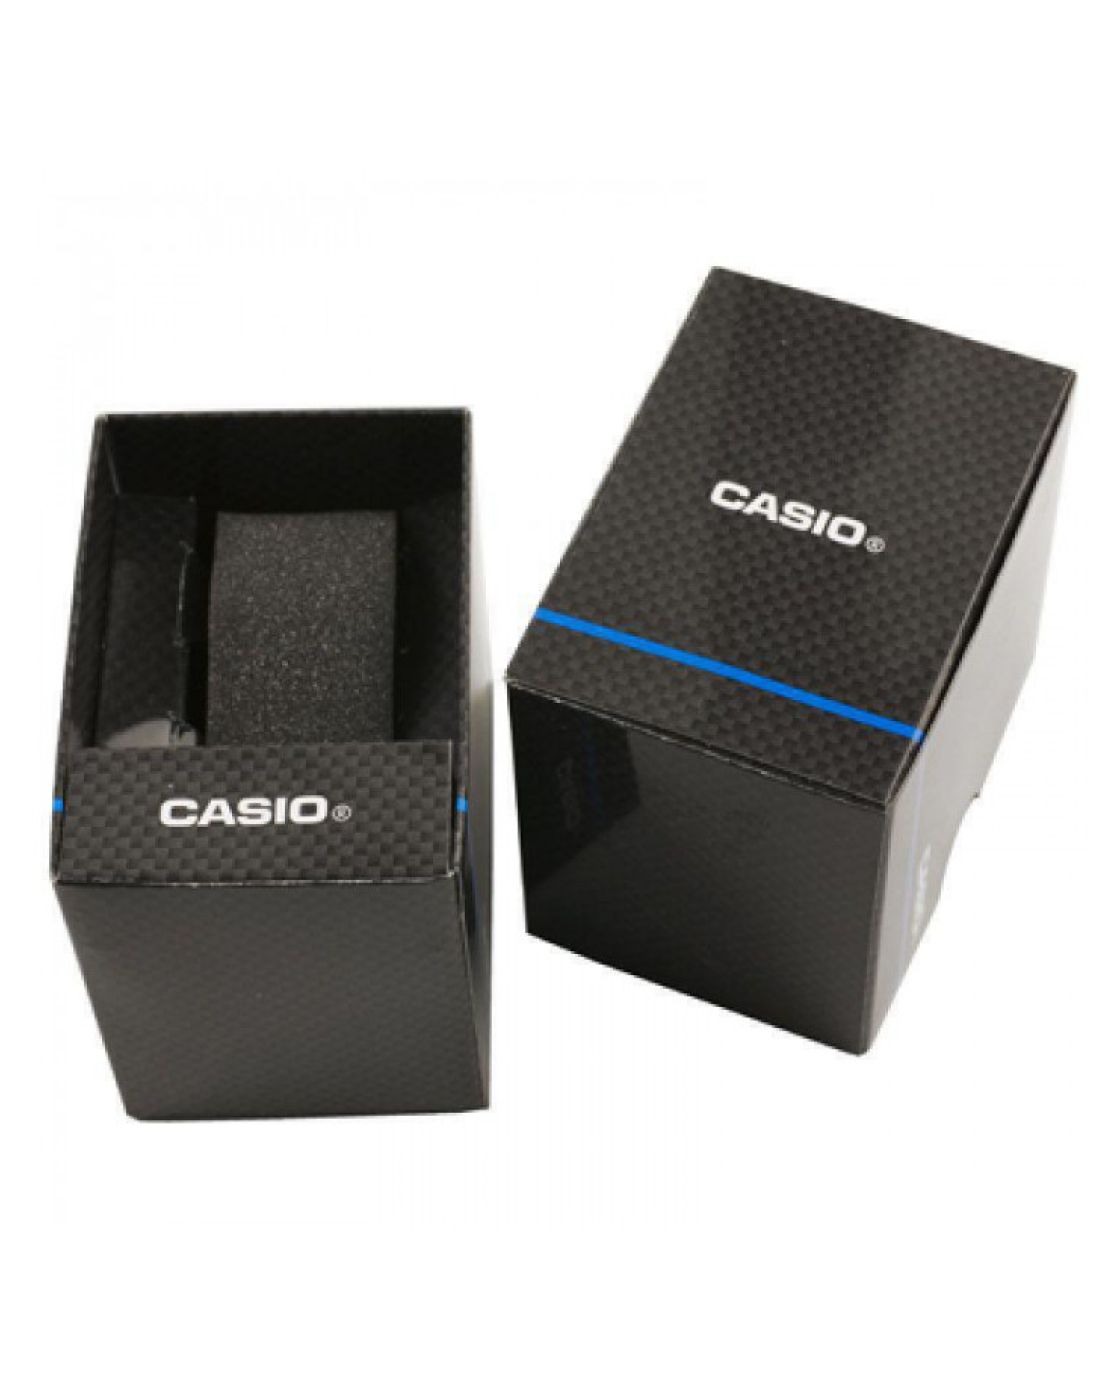 Clachic Casio | Collection WS-1300H-1AVEF